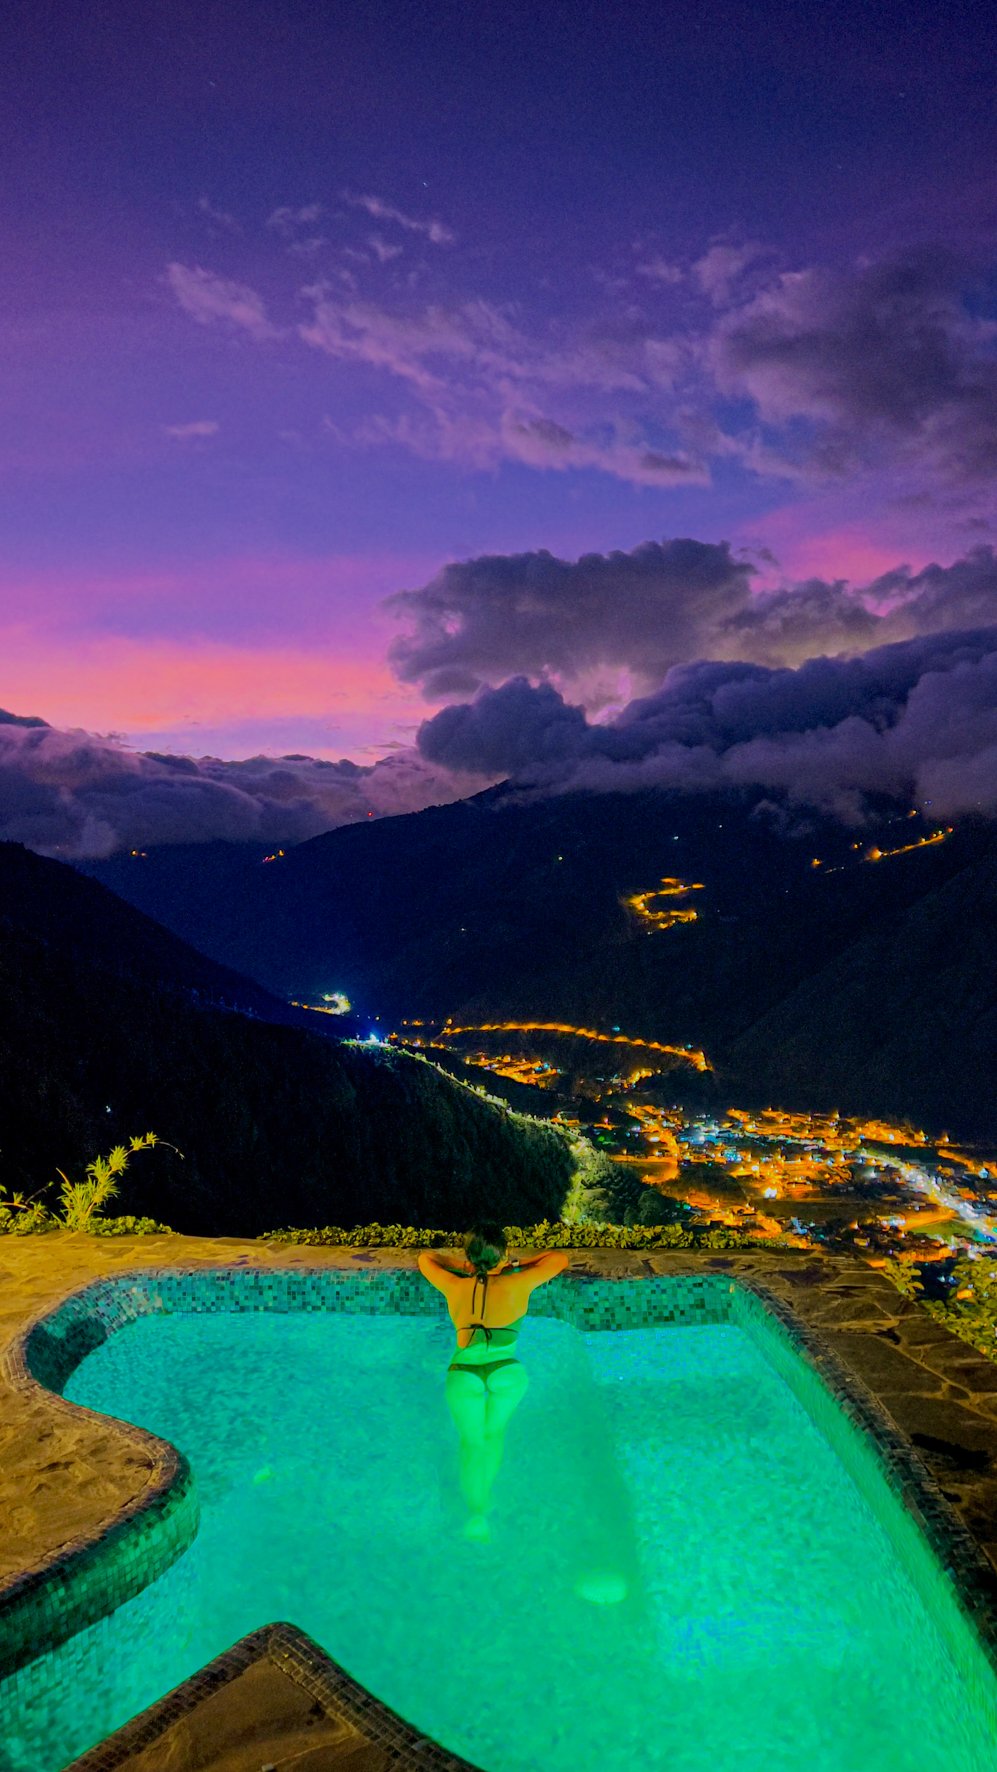 Sunset pools - Luna Volcan - Hotel in Banos Ecuador.jpg